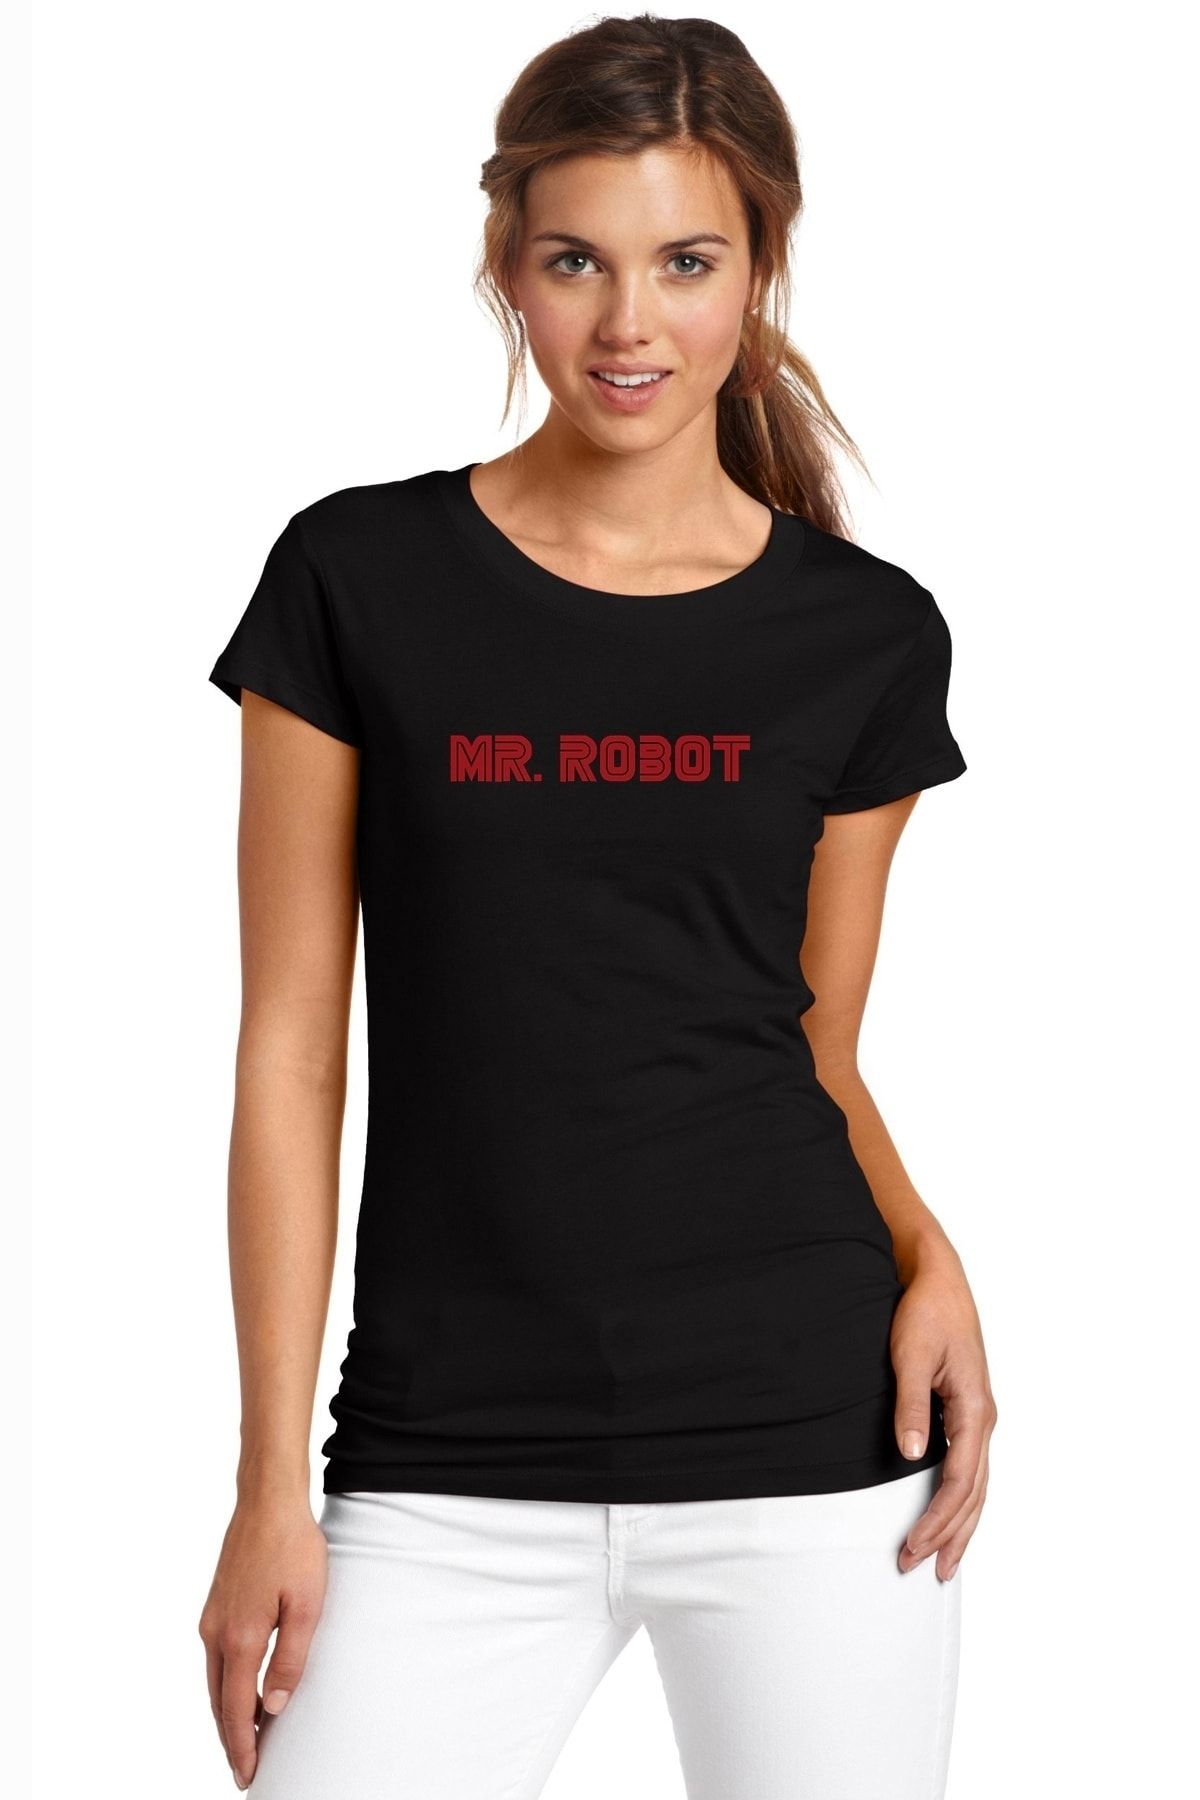 QIVI Mr Robot Baskılı Siyah Kadın Örme Tshirt